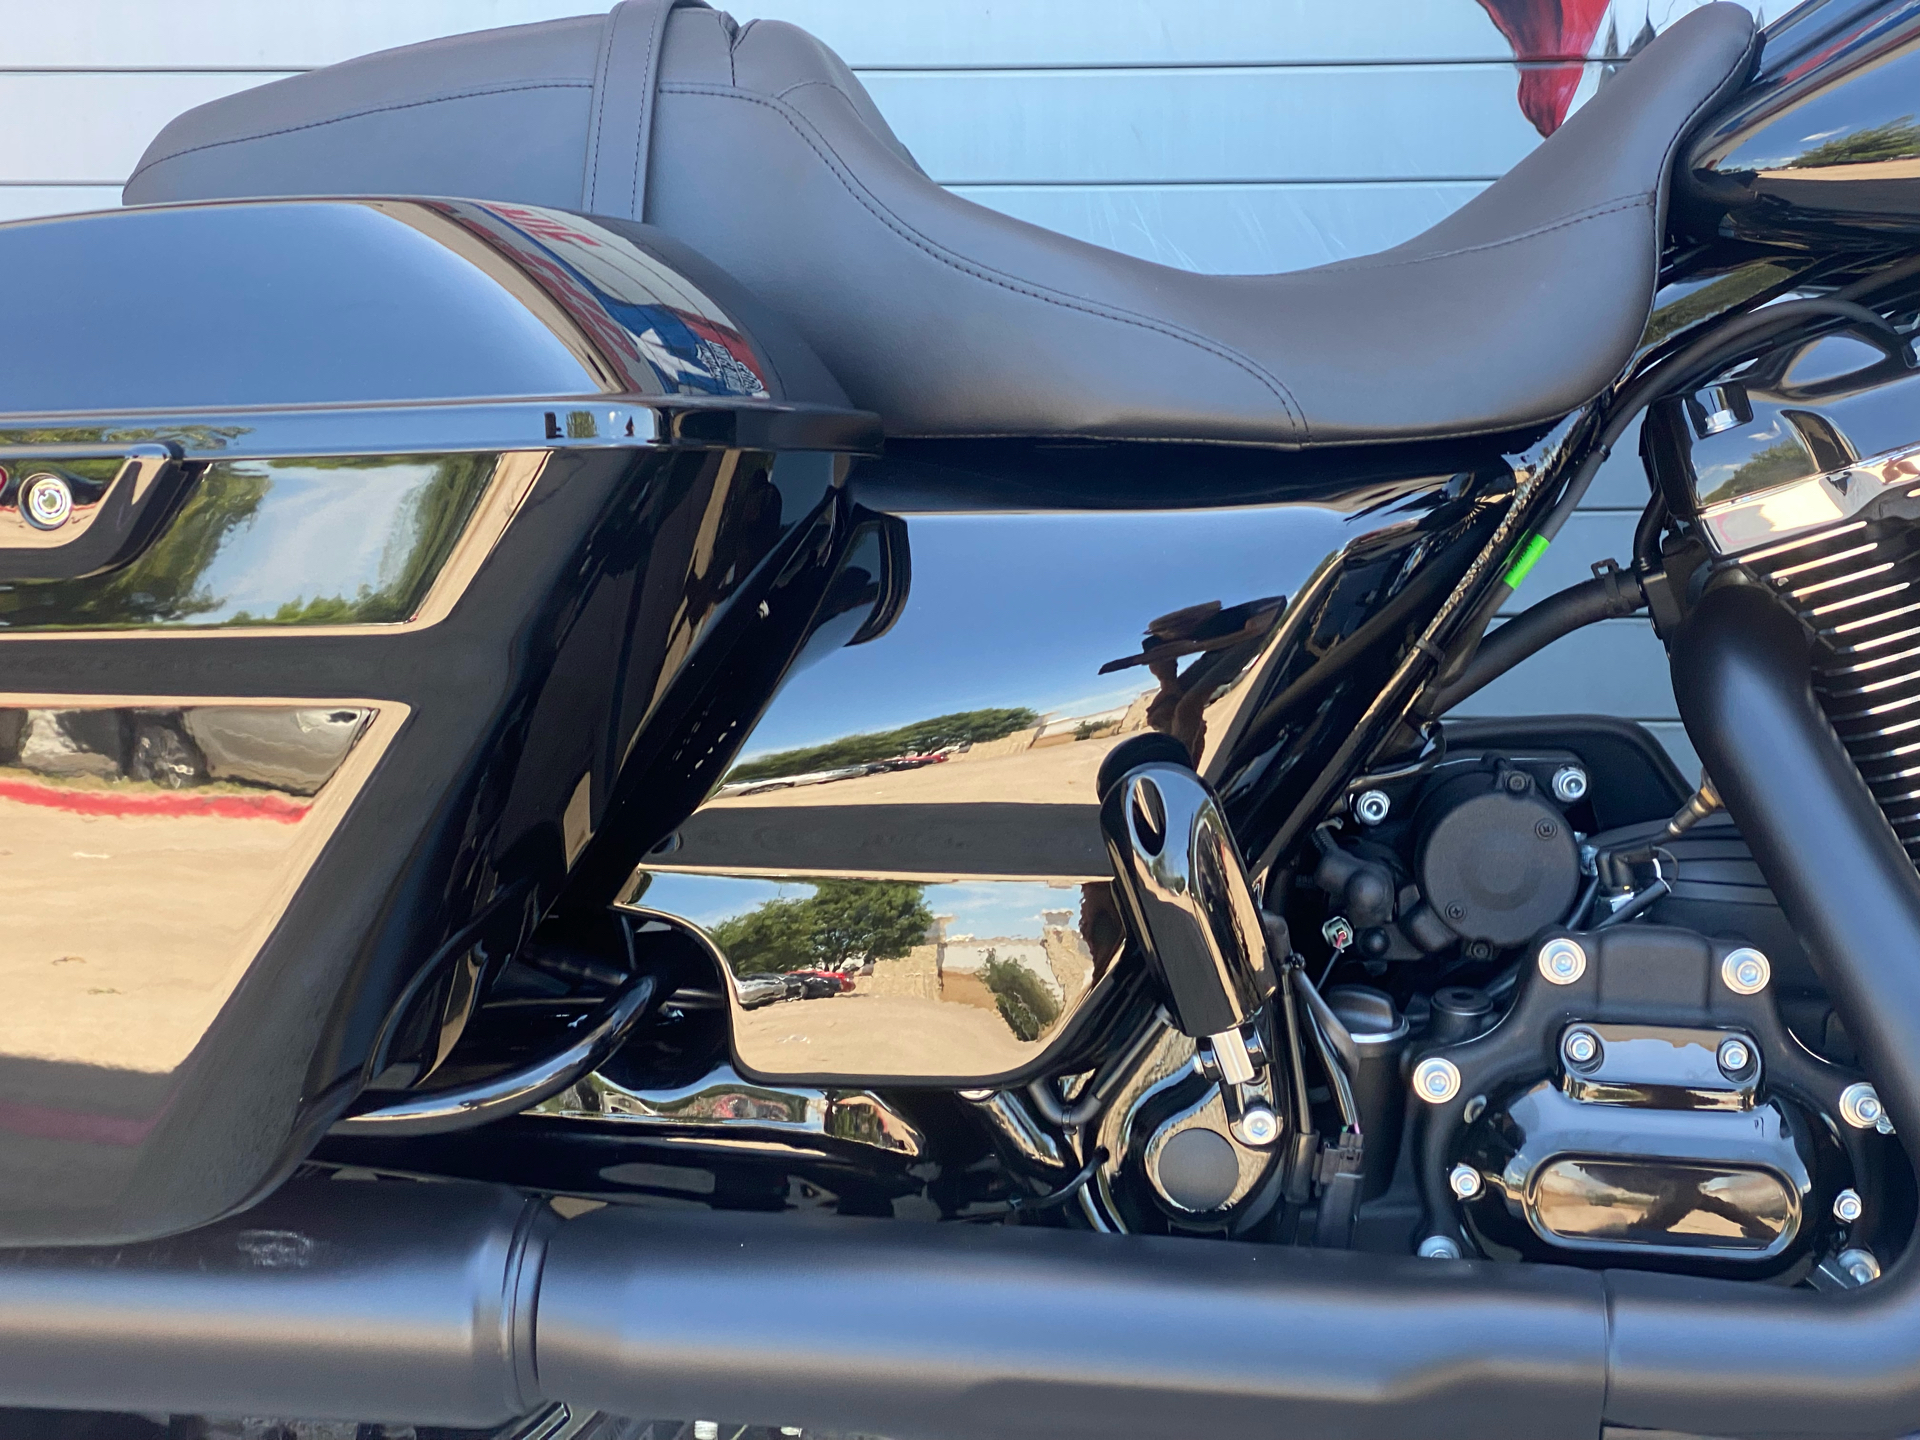 2022 Harley-Davidson Road Glide® Special in Grand Prairie, Texas - Photo 7